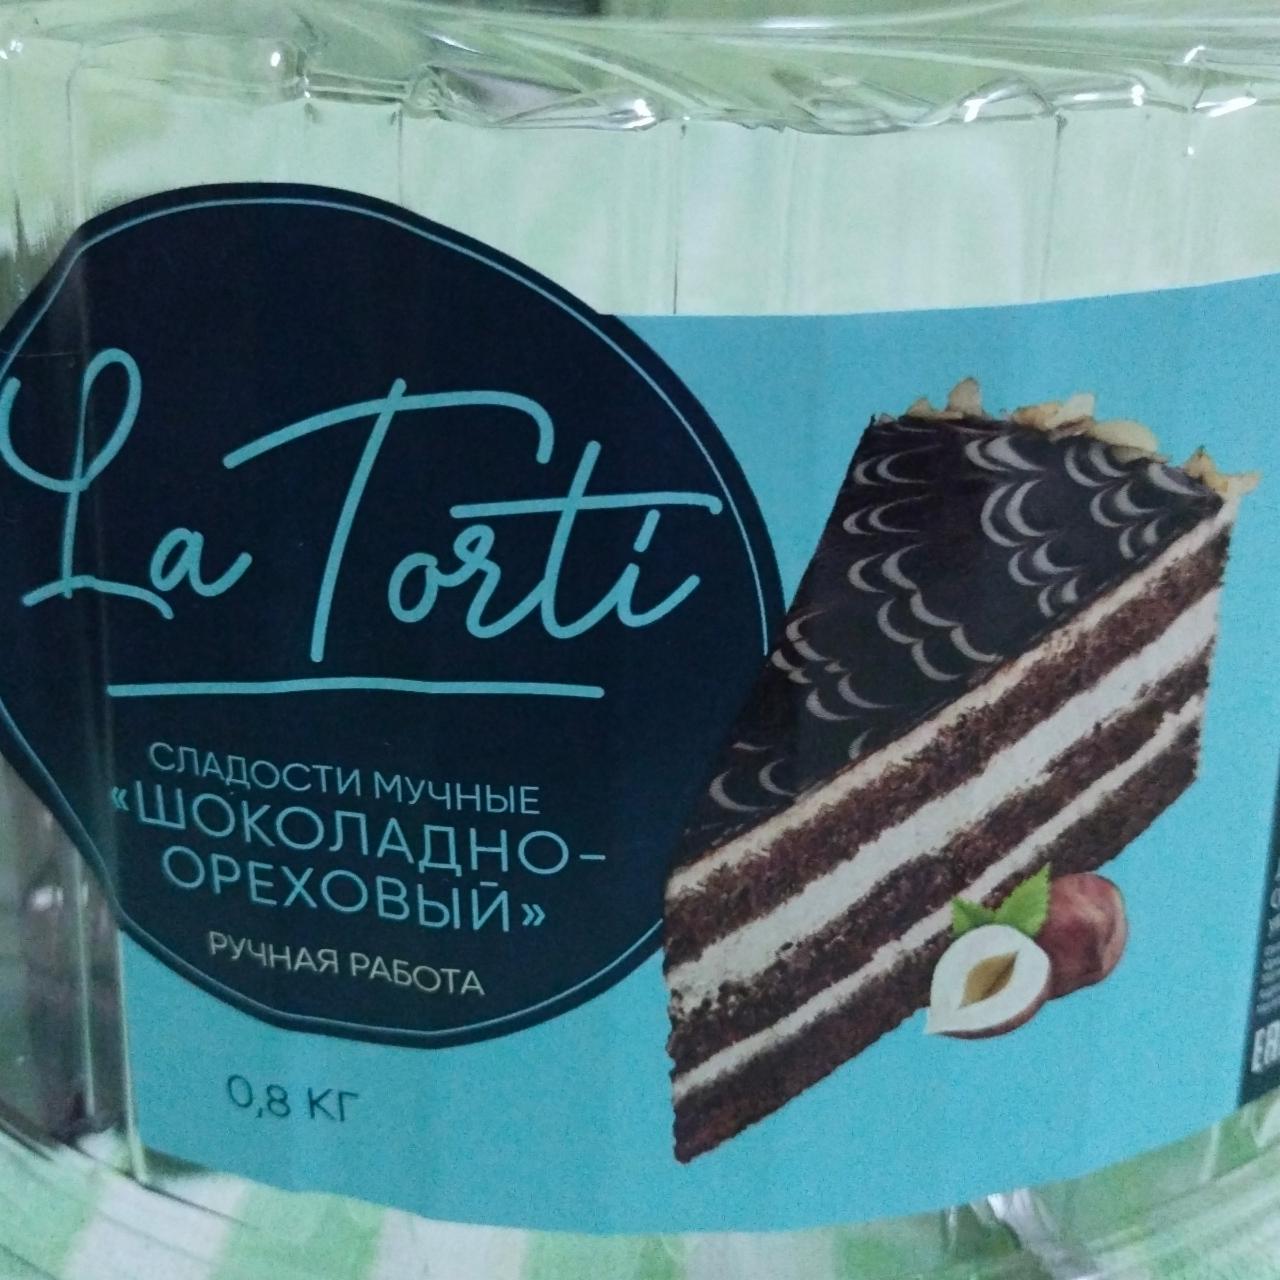 Фото - торт шоколадно-ореховый La Tosti